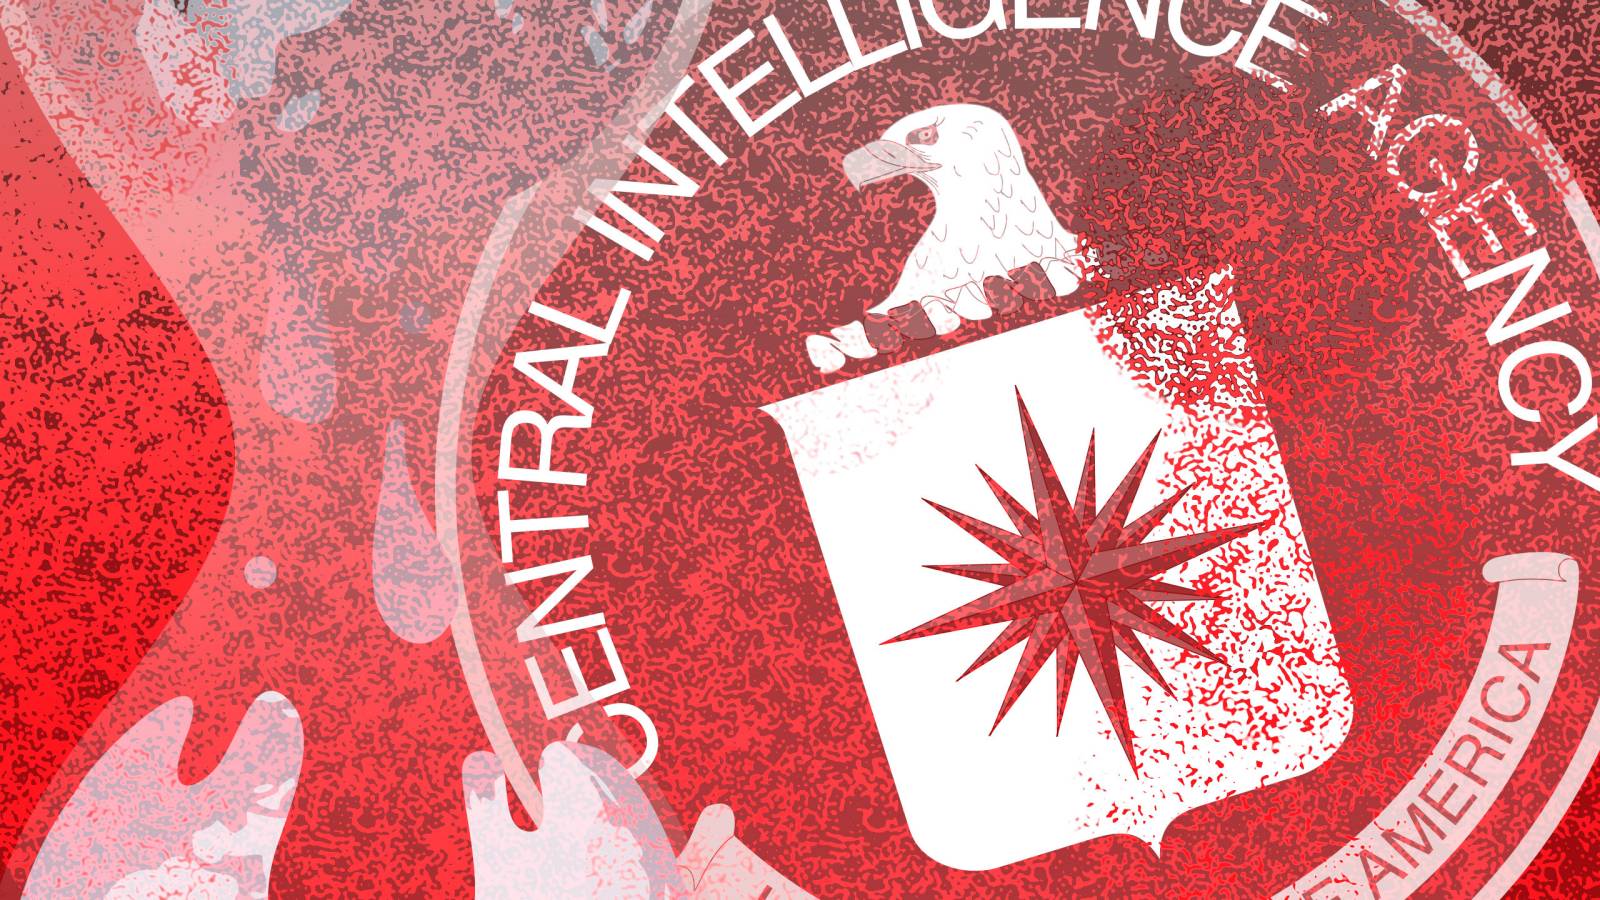 CIA-spionage